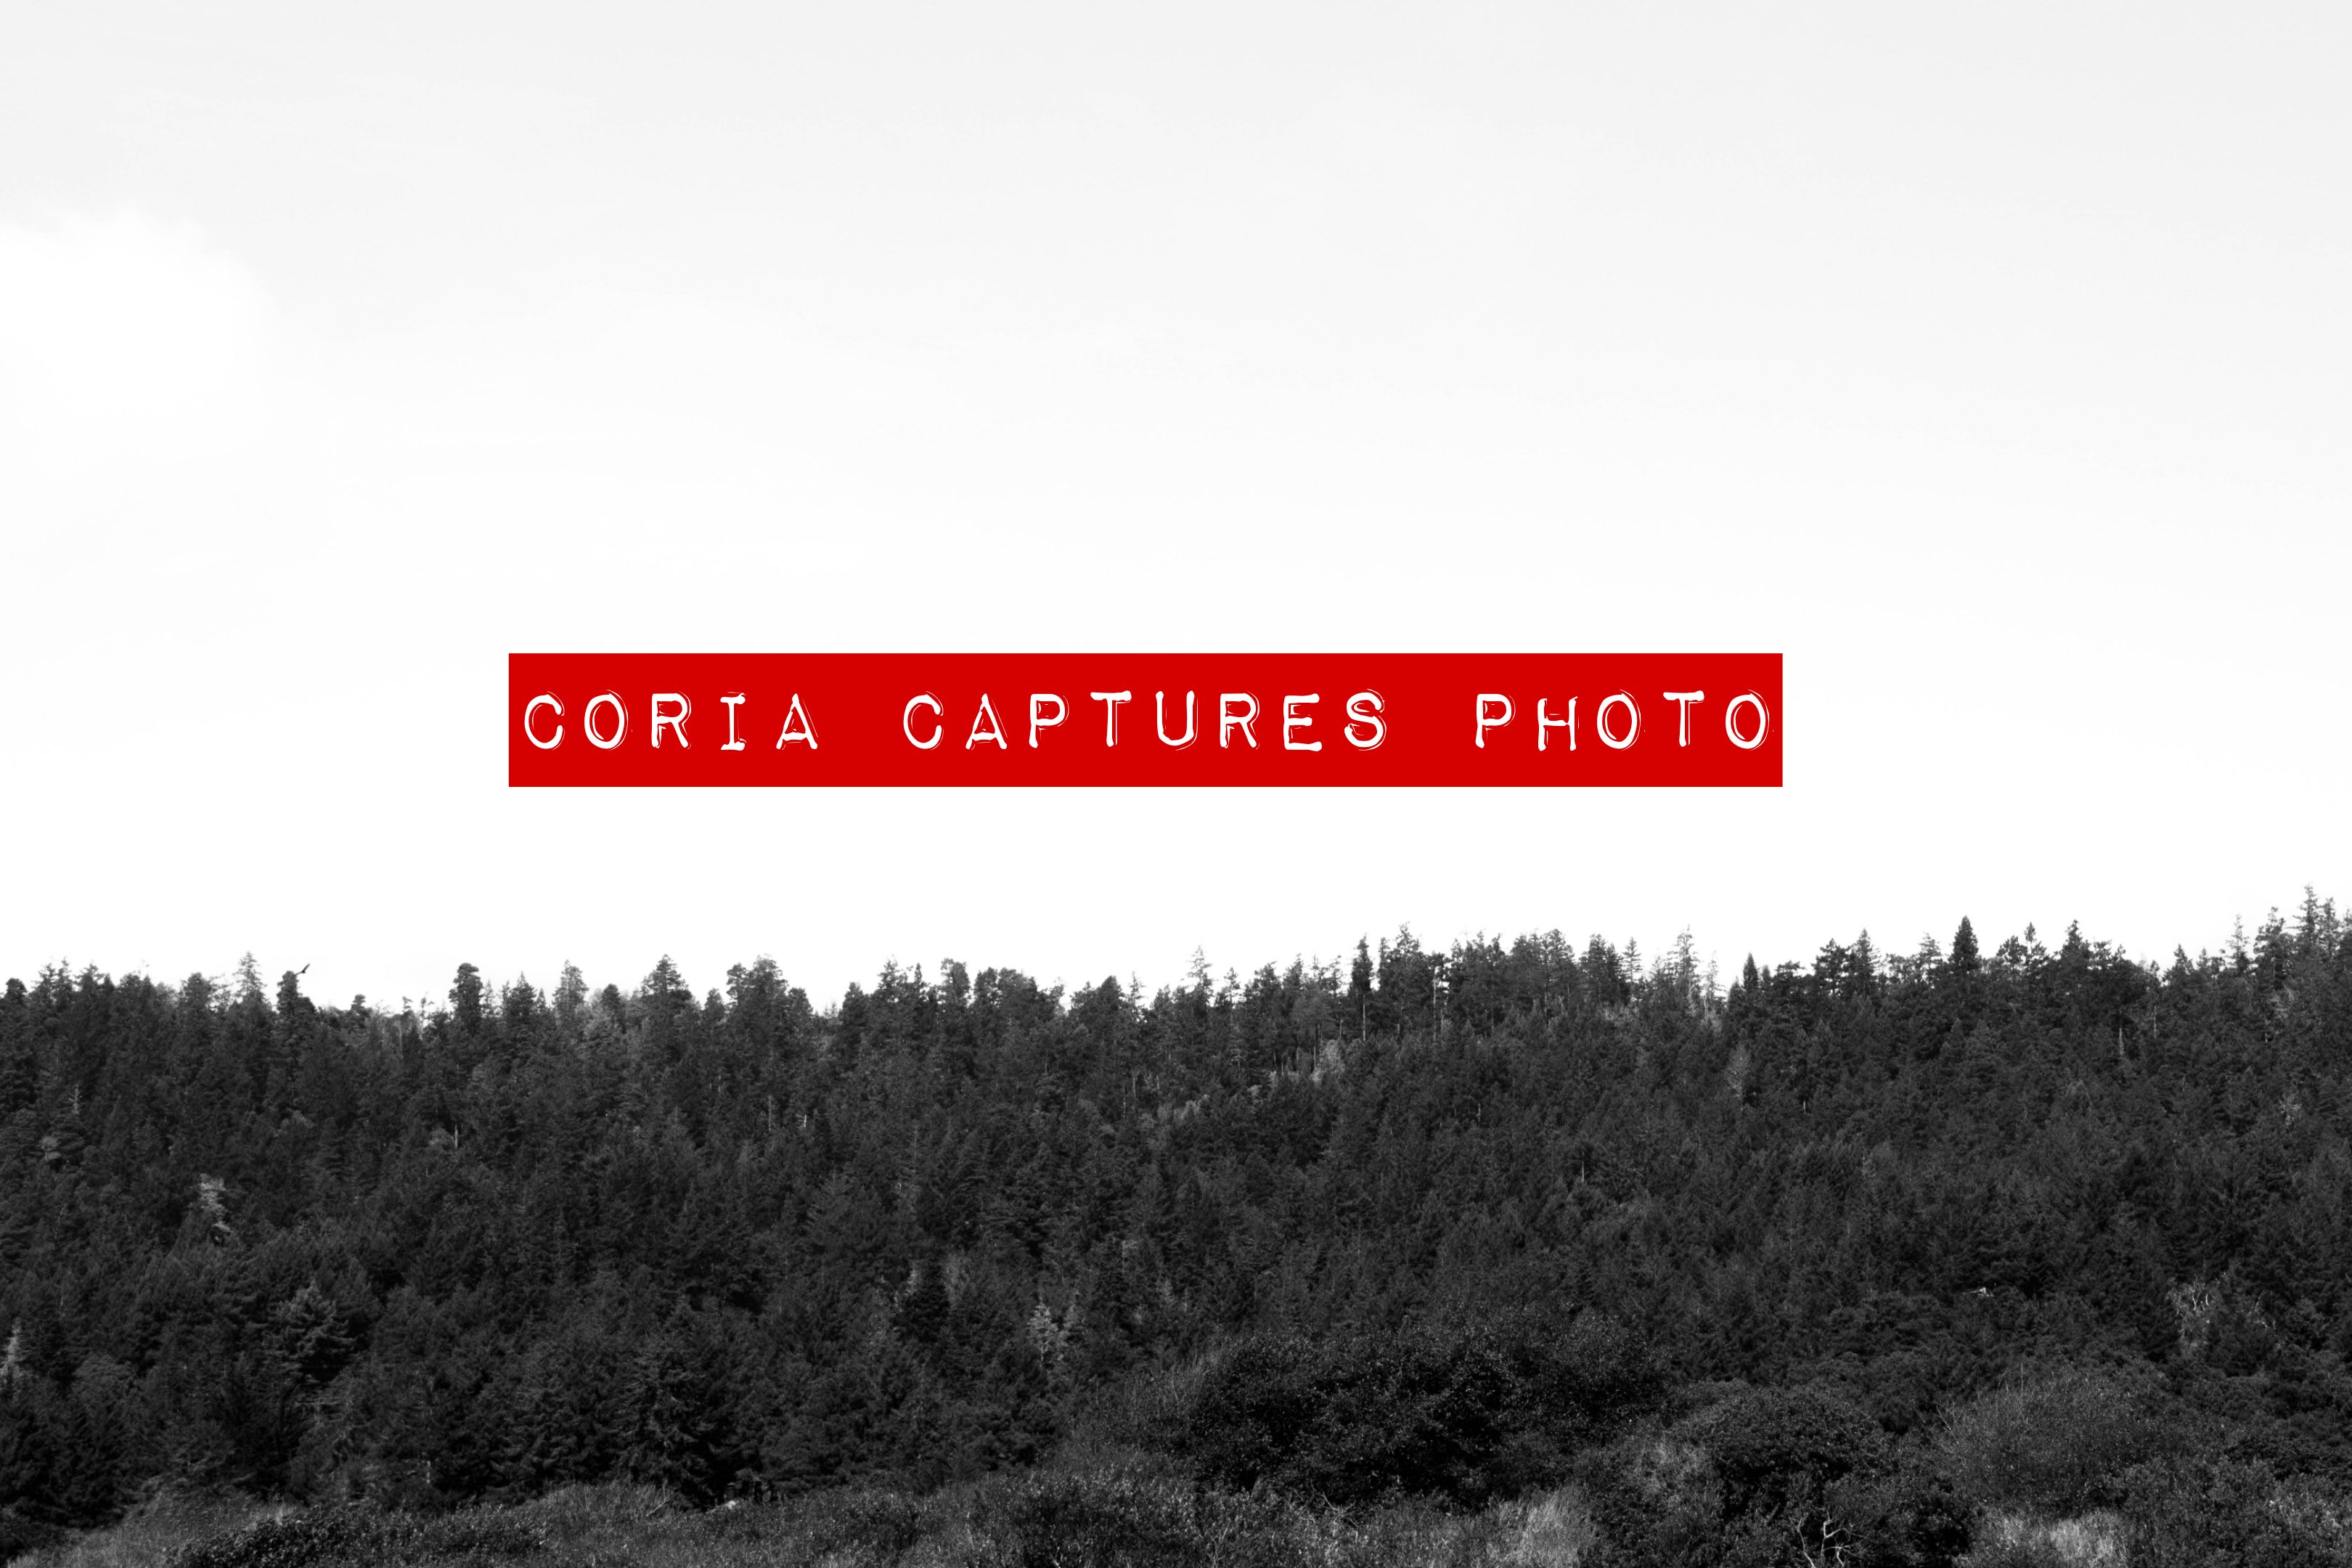 Coria Captures Photo